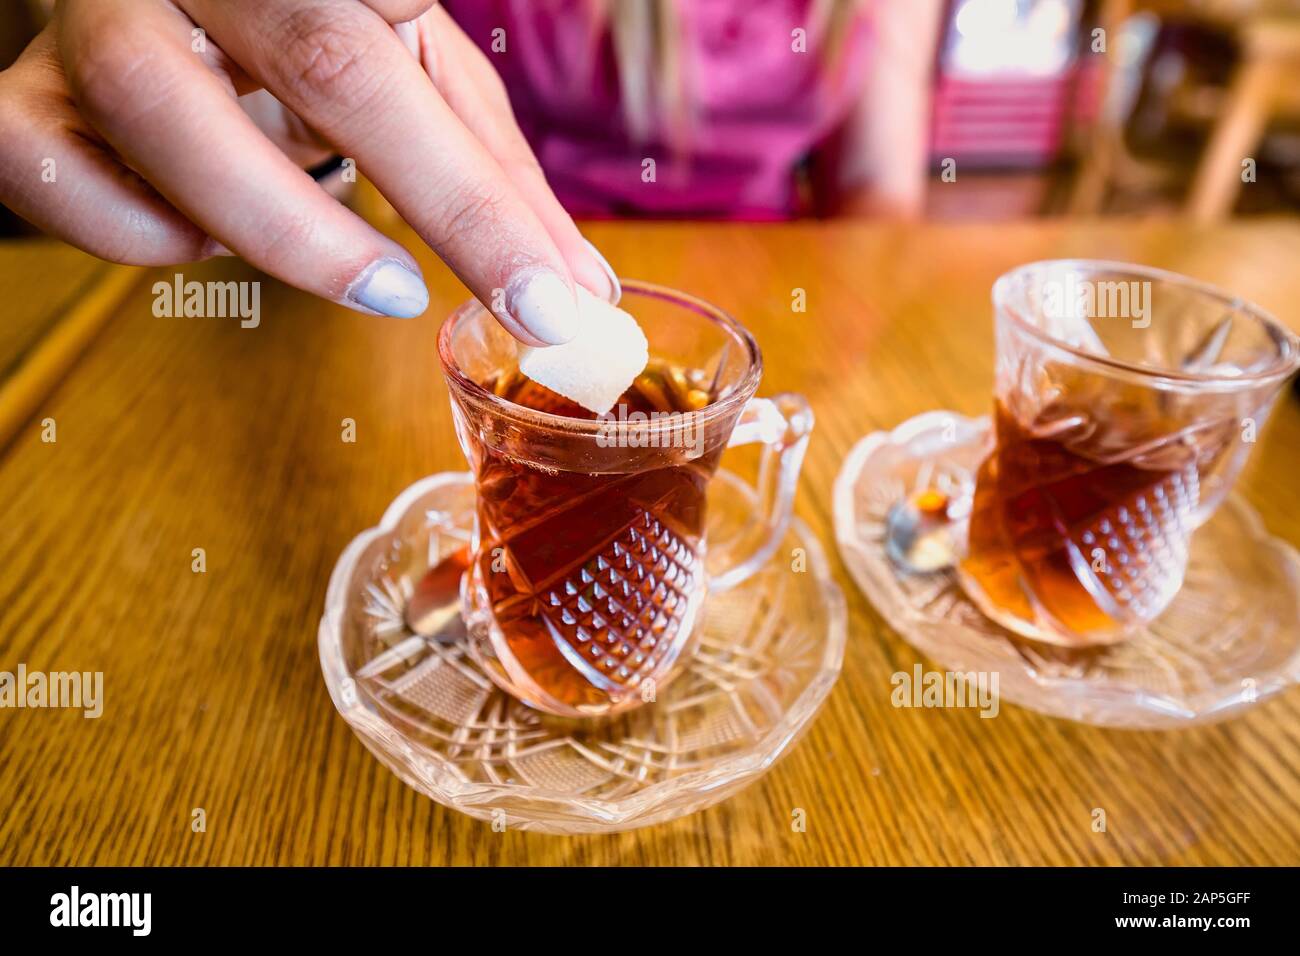 Woman's hand putting shugar to one of two tot glasses of tea at Petra,  Jordan Stock Photo - Alamy